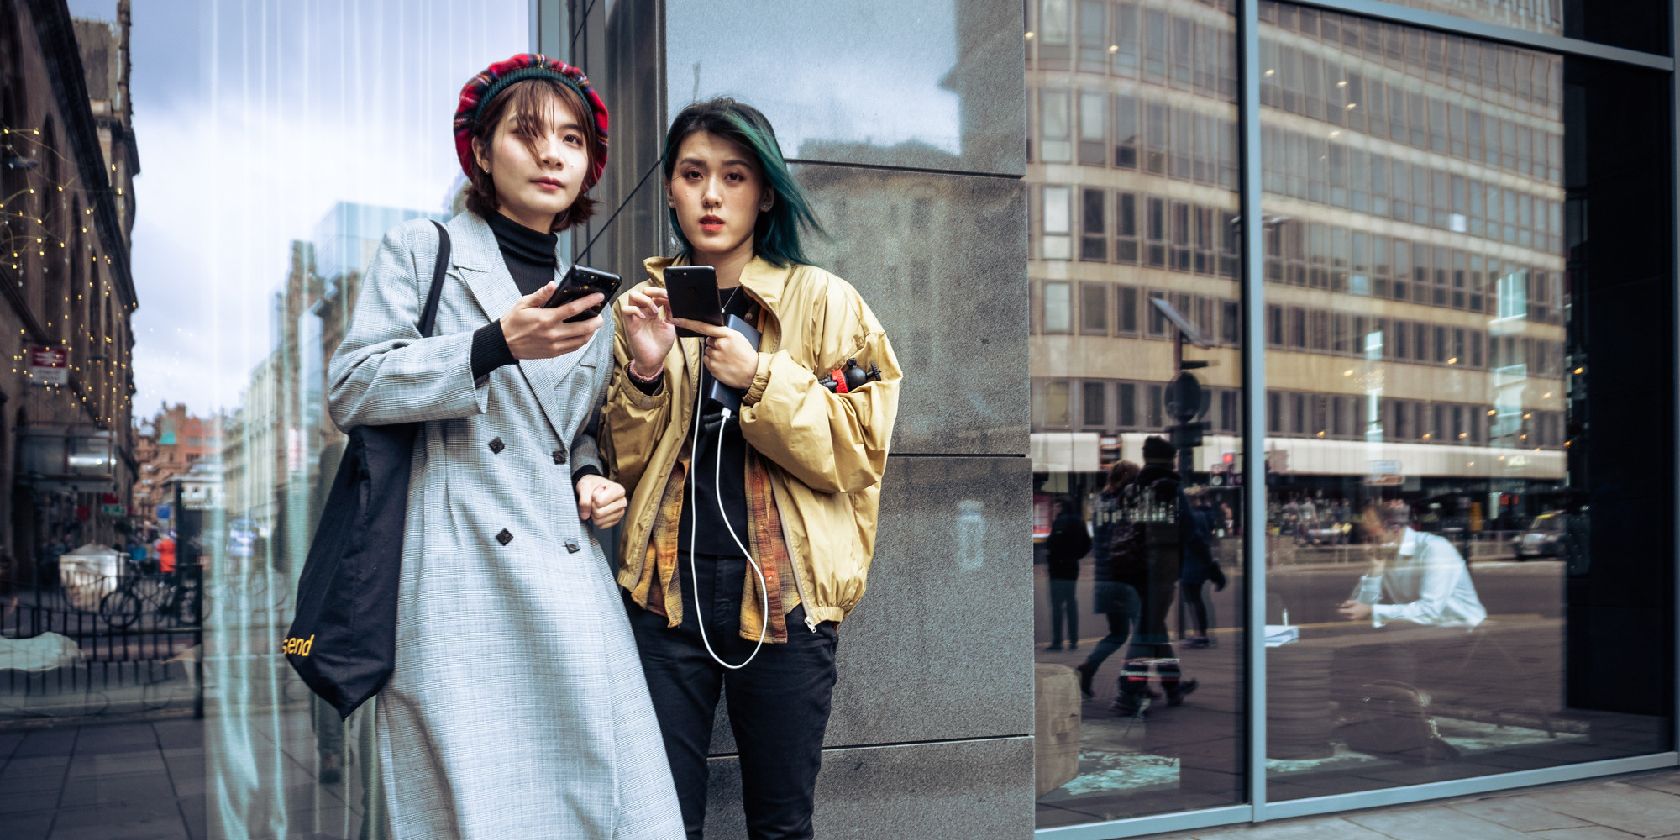 Two women holding phones.